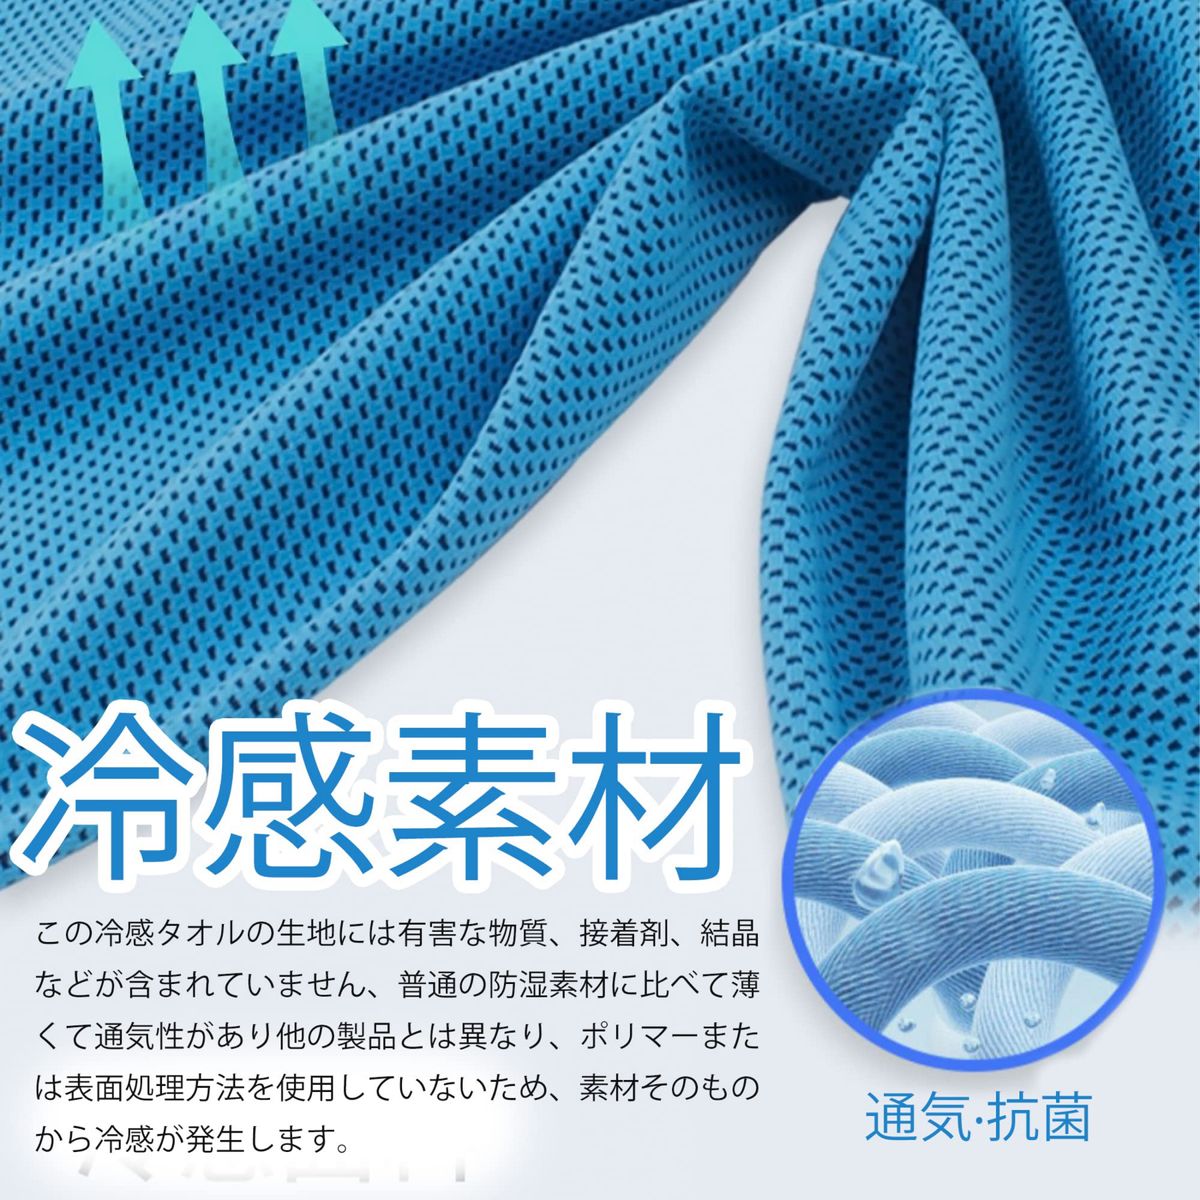 GenmaiBule 冷却タオル 冷感タオル クールタオル UVカット アウトドア スポーツ 首 熱中症対策 収納袋入り 